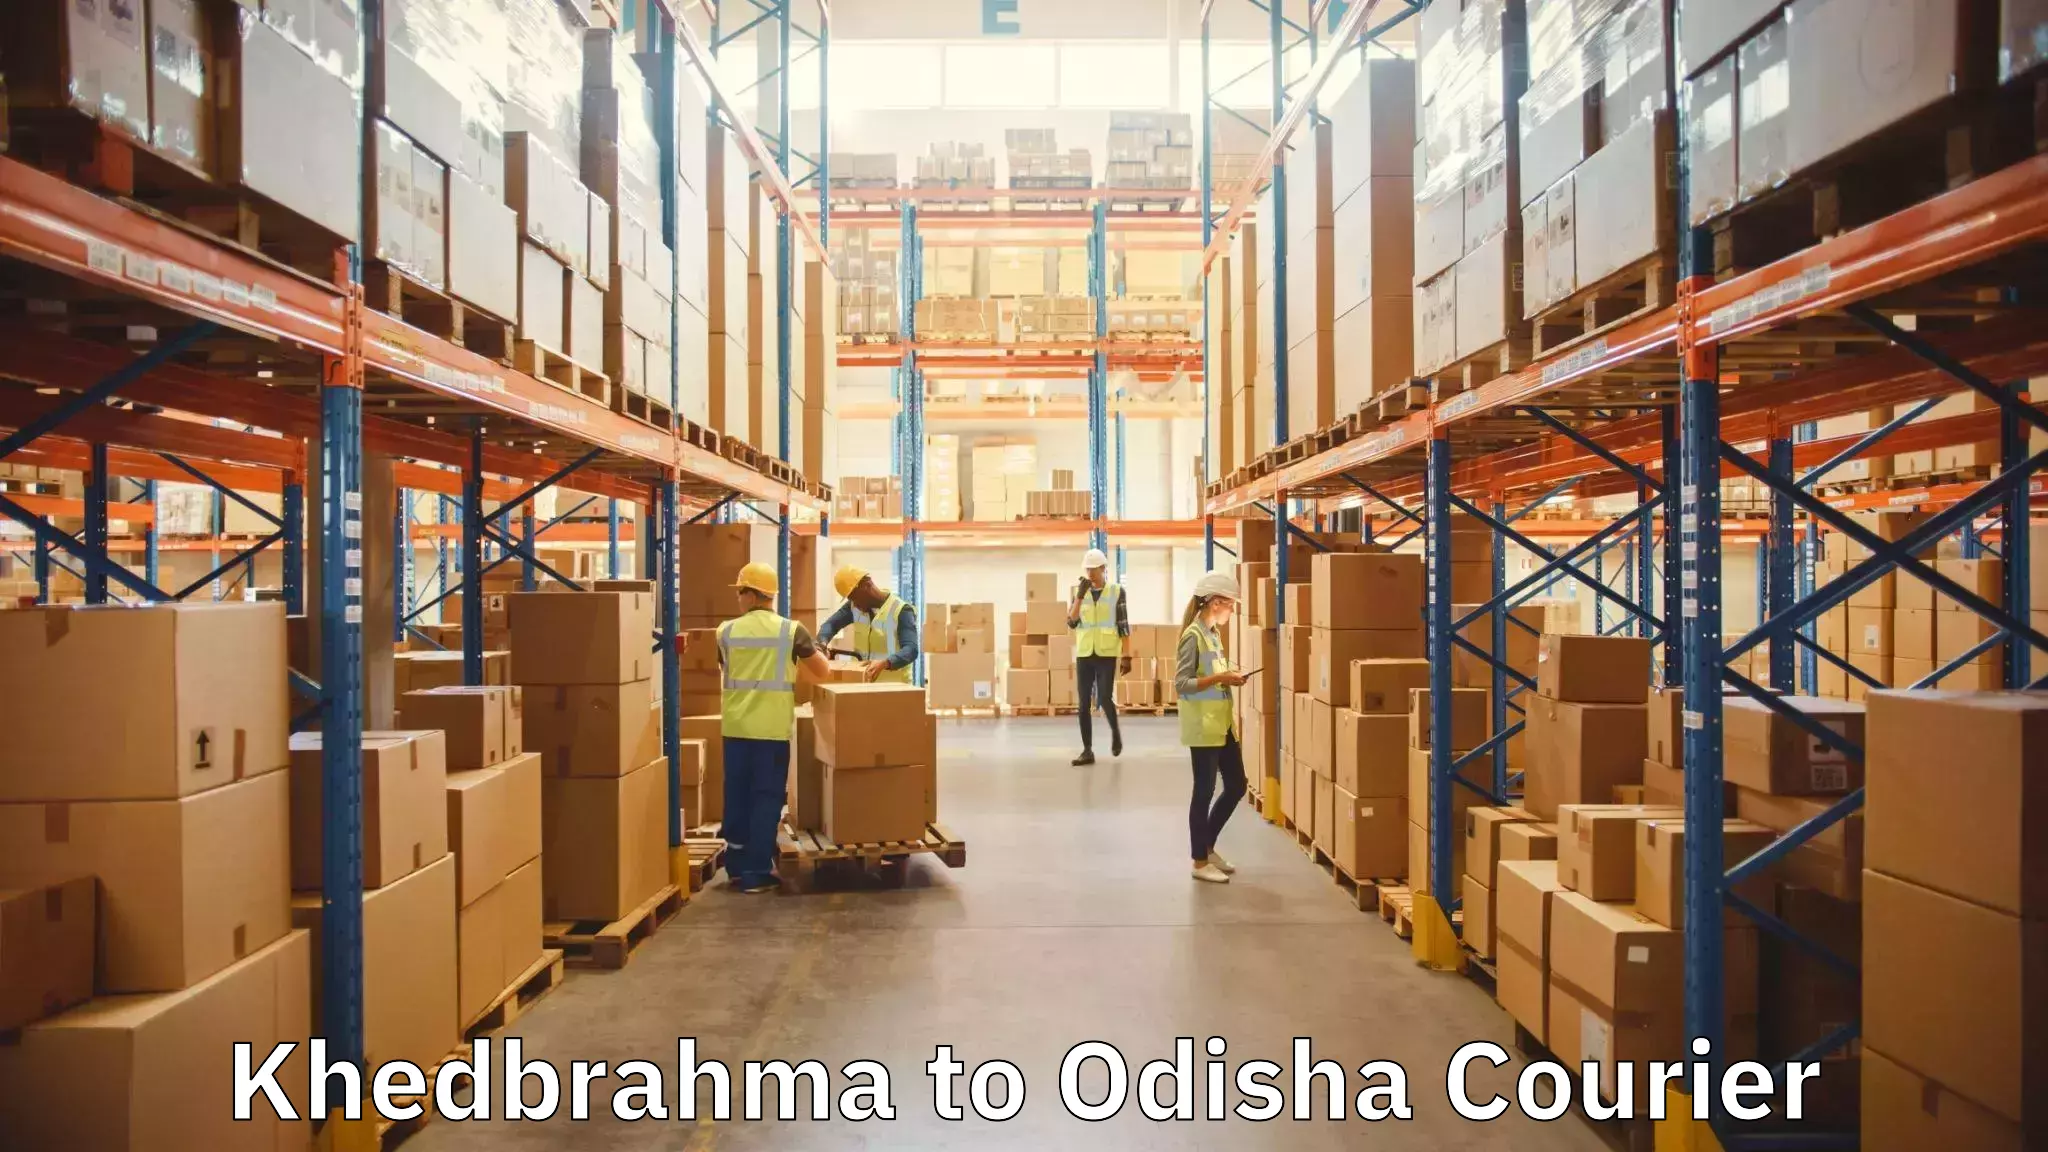 Moving and packing experts Khedbrahma to Odisha